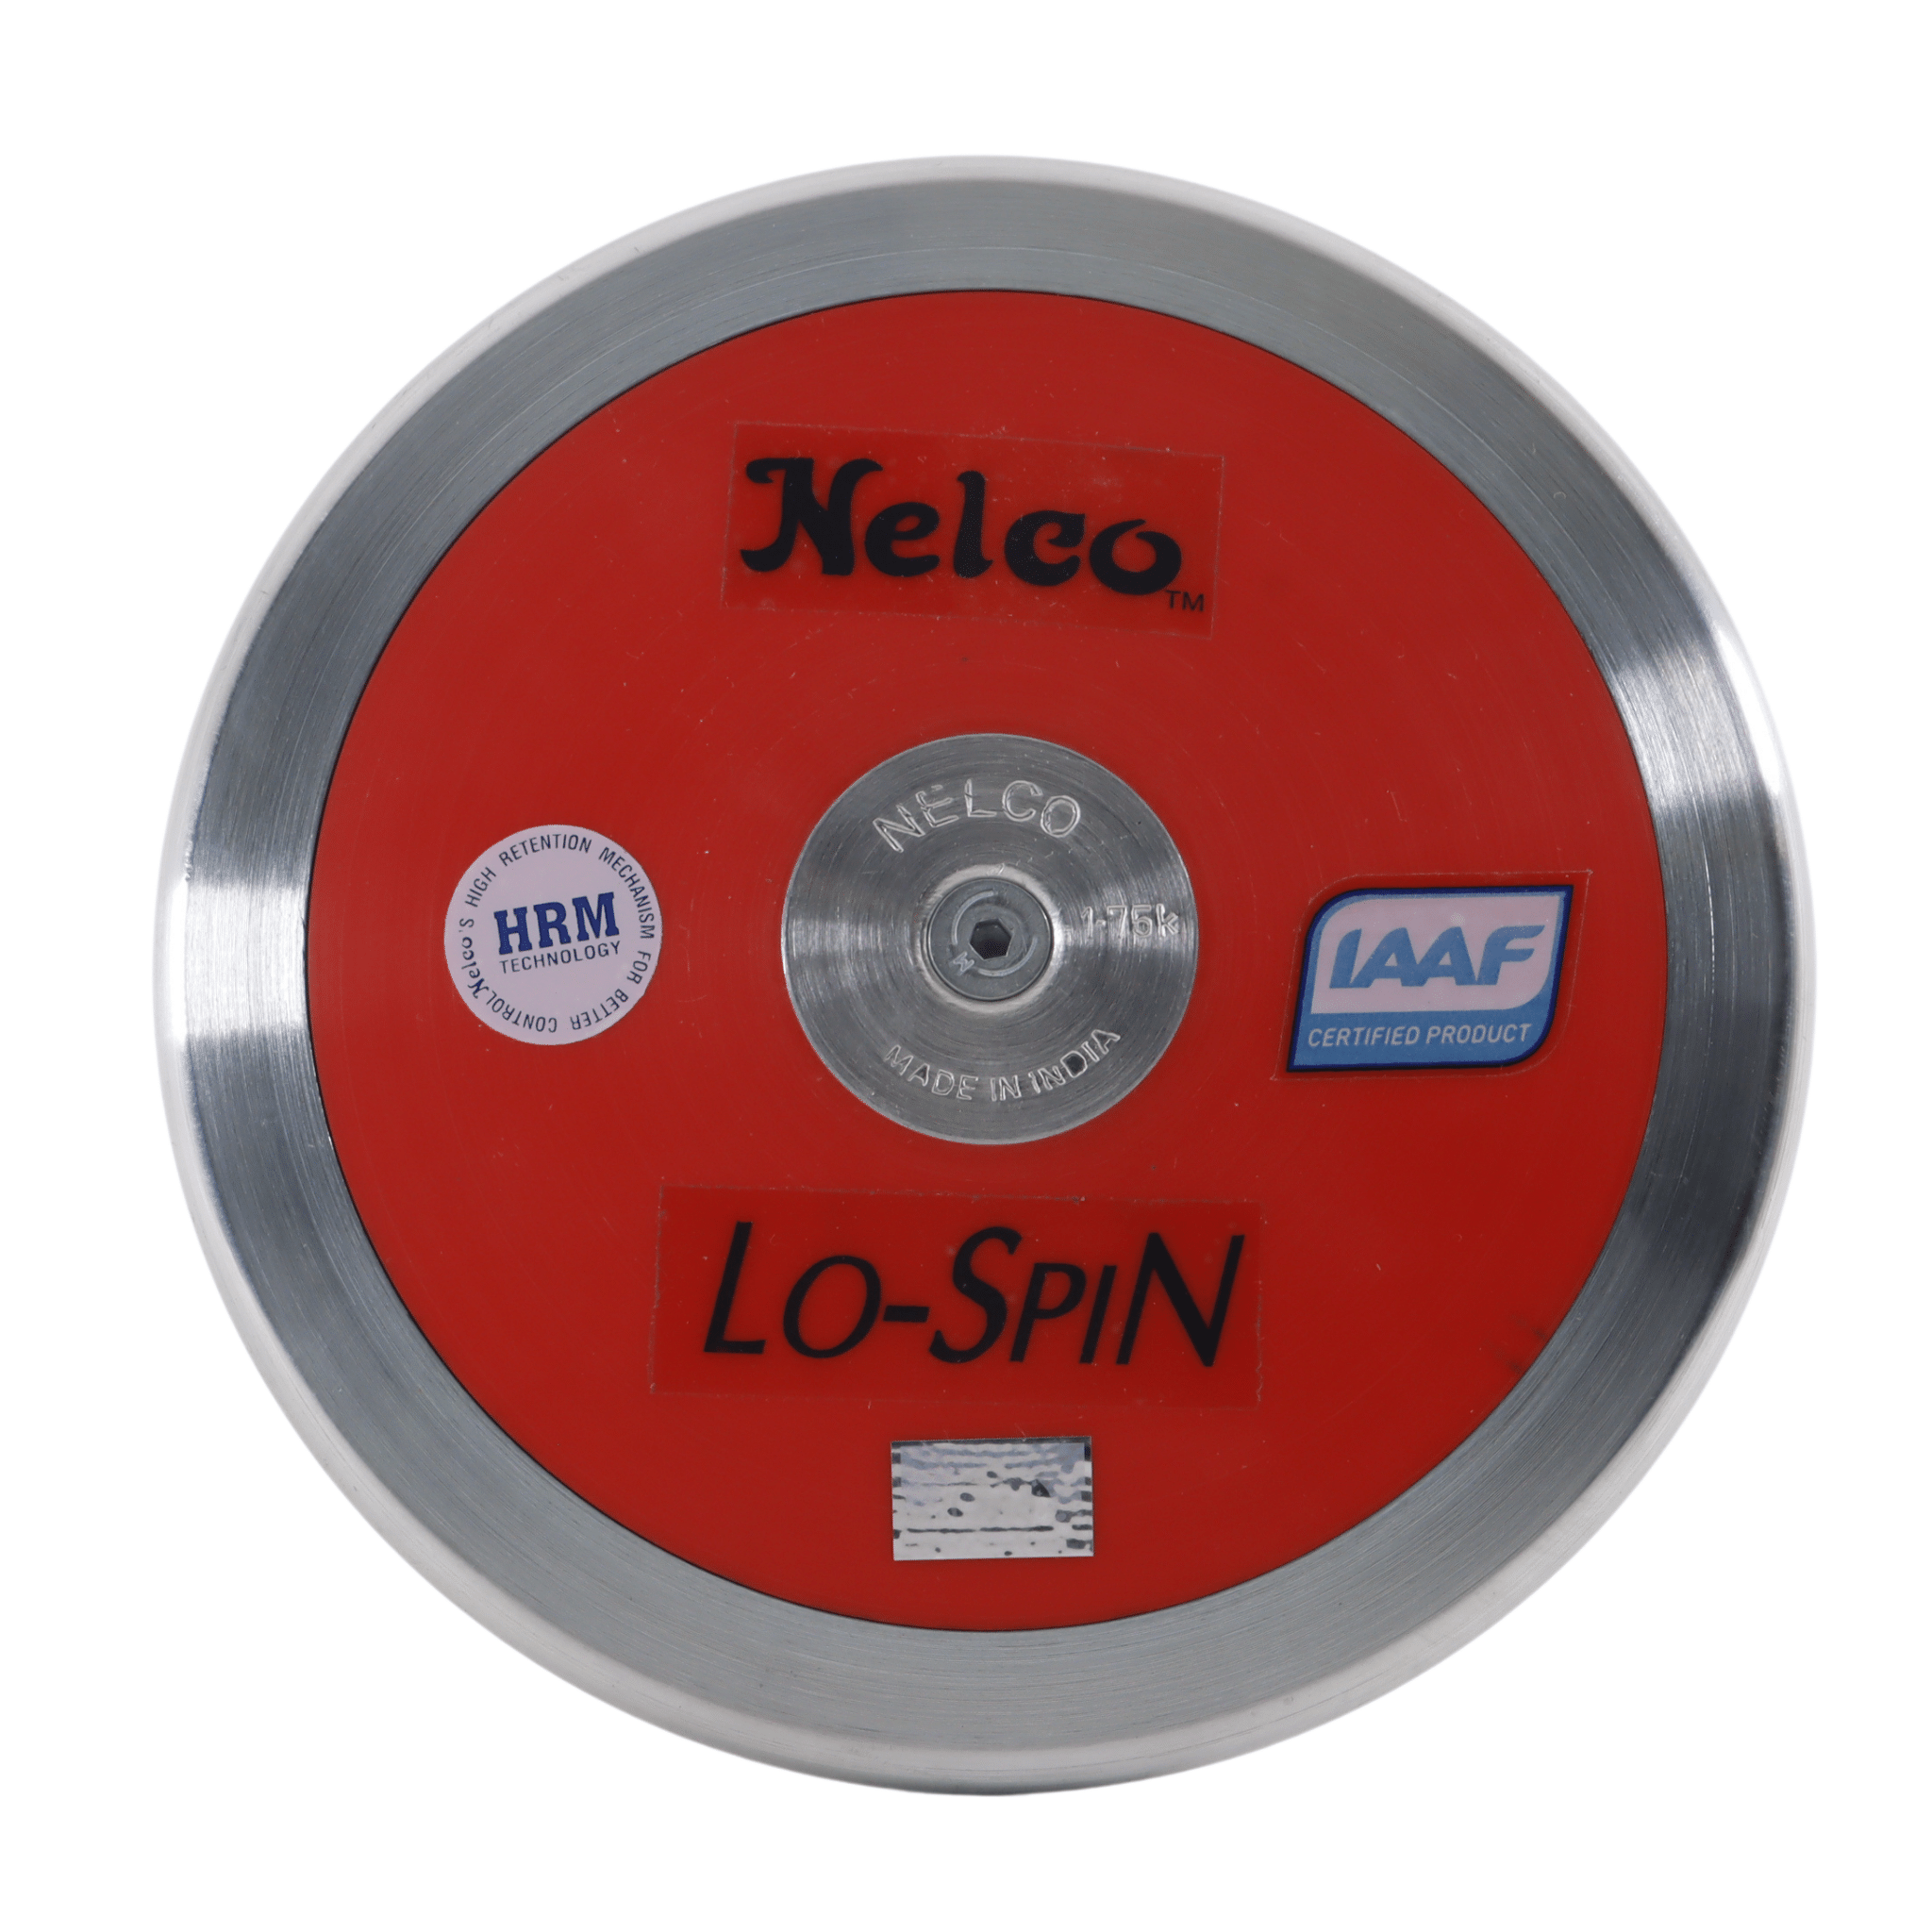 Nelco Lo-Spin RimGlide 65M Discus | Red plates, steel rim, yellow centre | 1.75kg